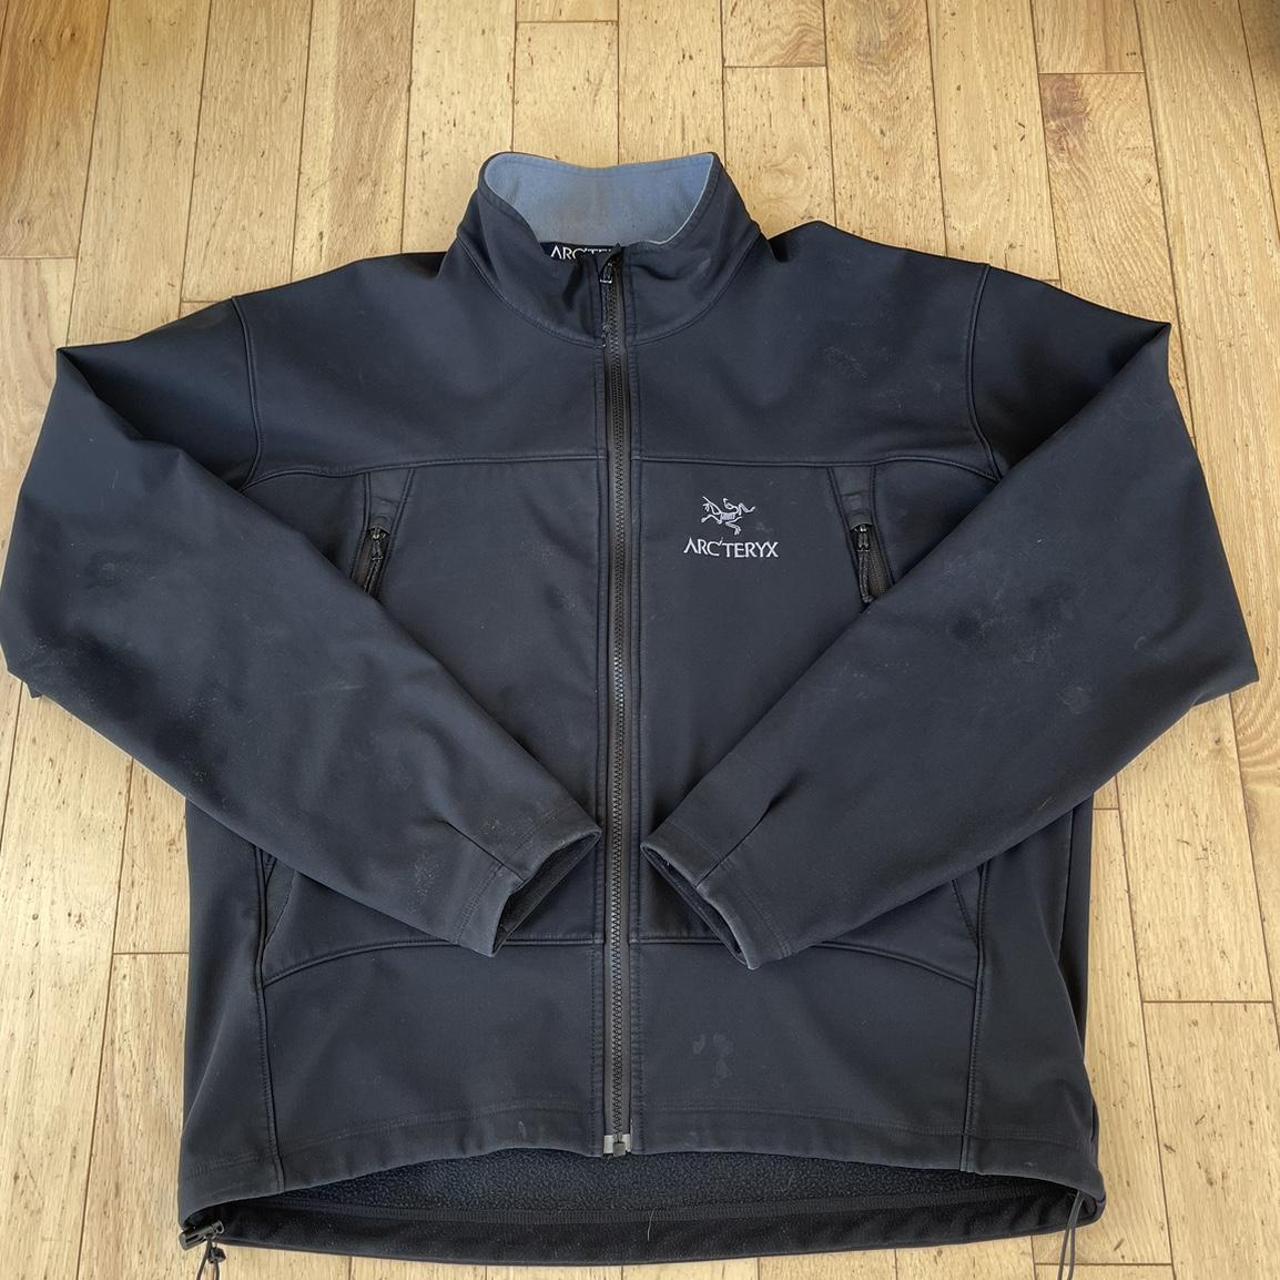 Vintage Arc’teryx jacket Black with white logo on... - Depop